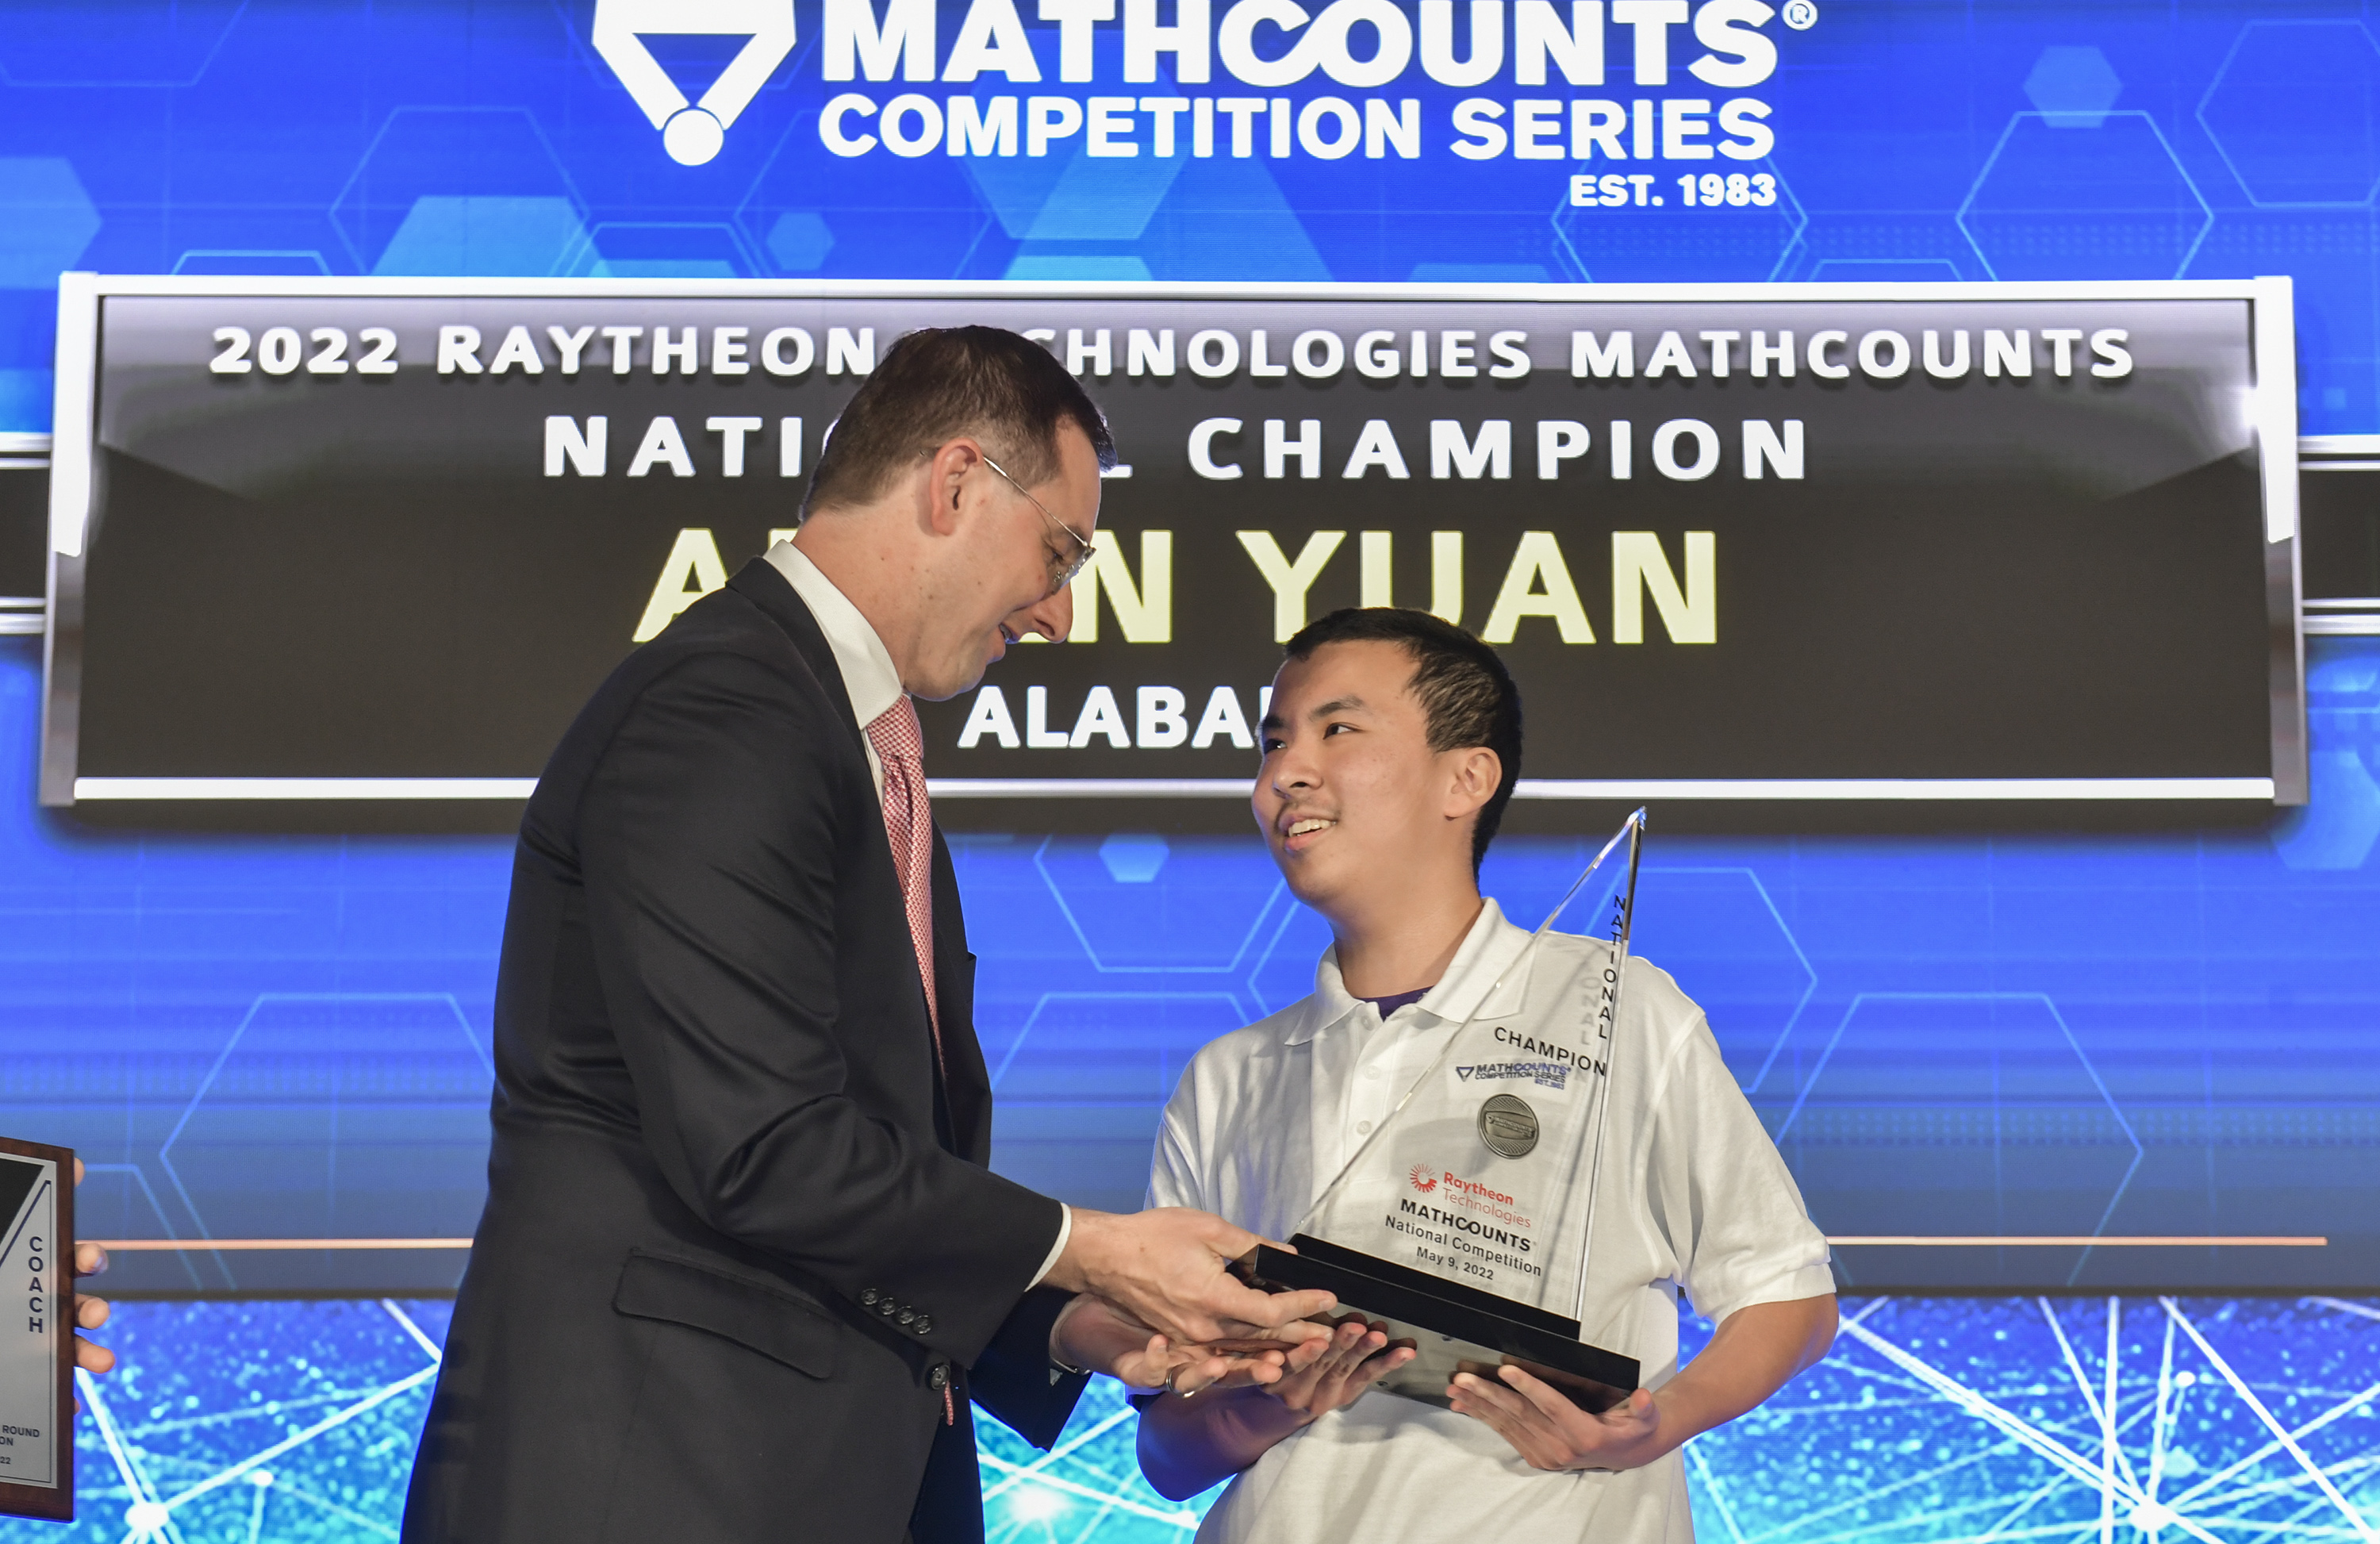 Allan Yuan congratulated by Tracey Gray